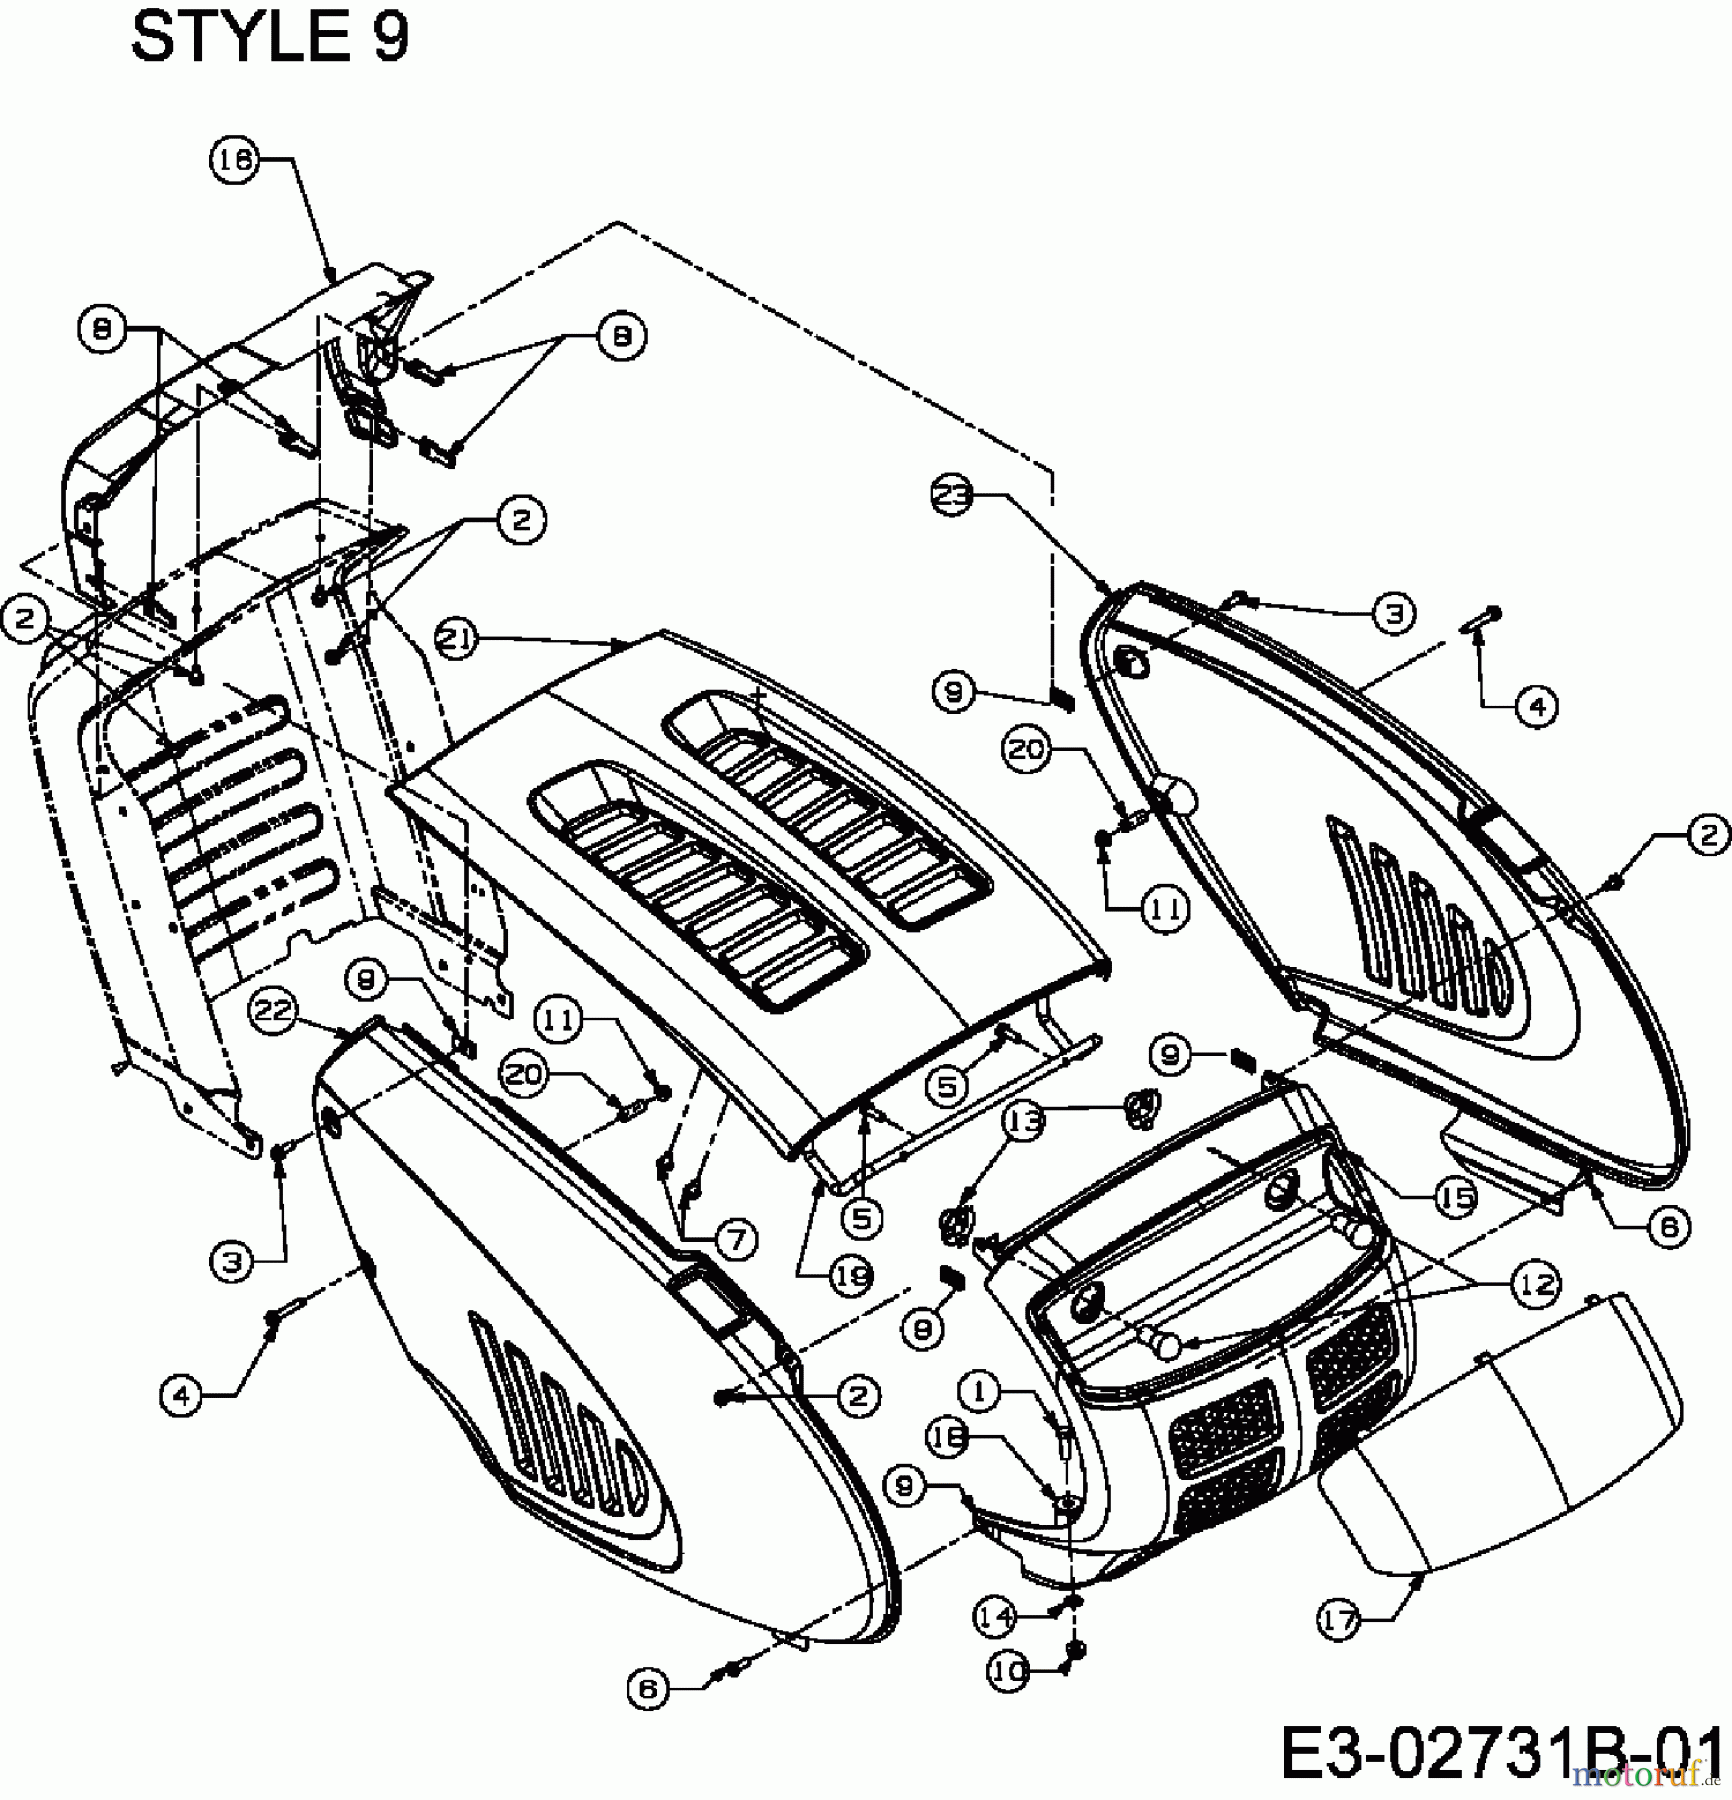  Efco Lawn tractors Formula 108/15.5 H 13AM799G637  (2007) Engine hood 9-Style